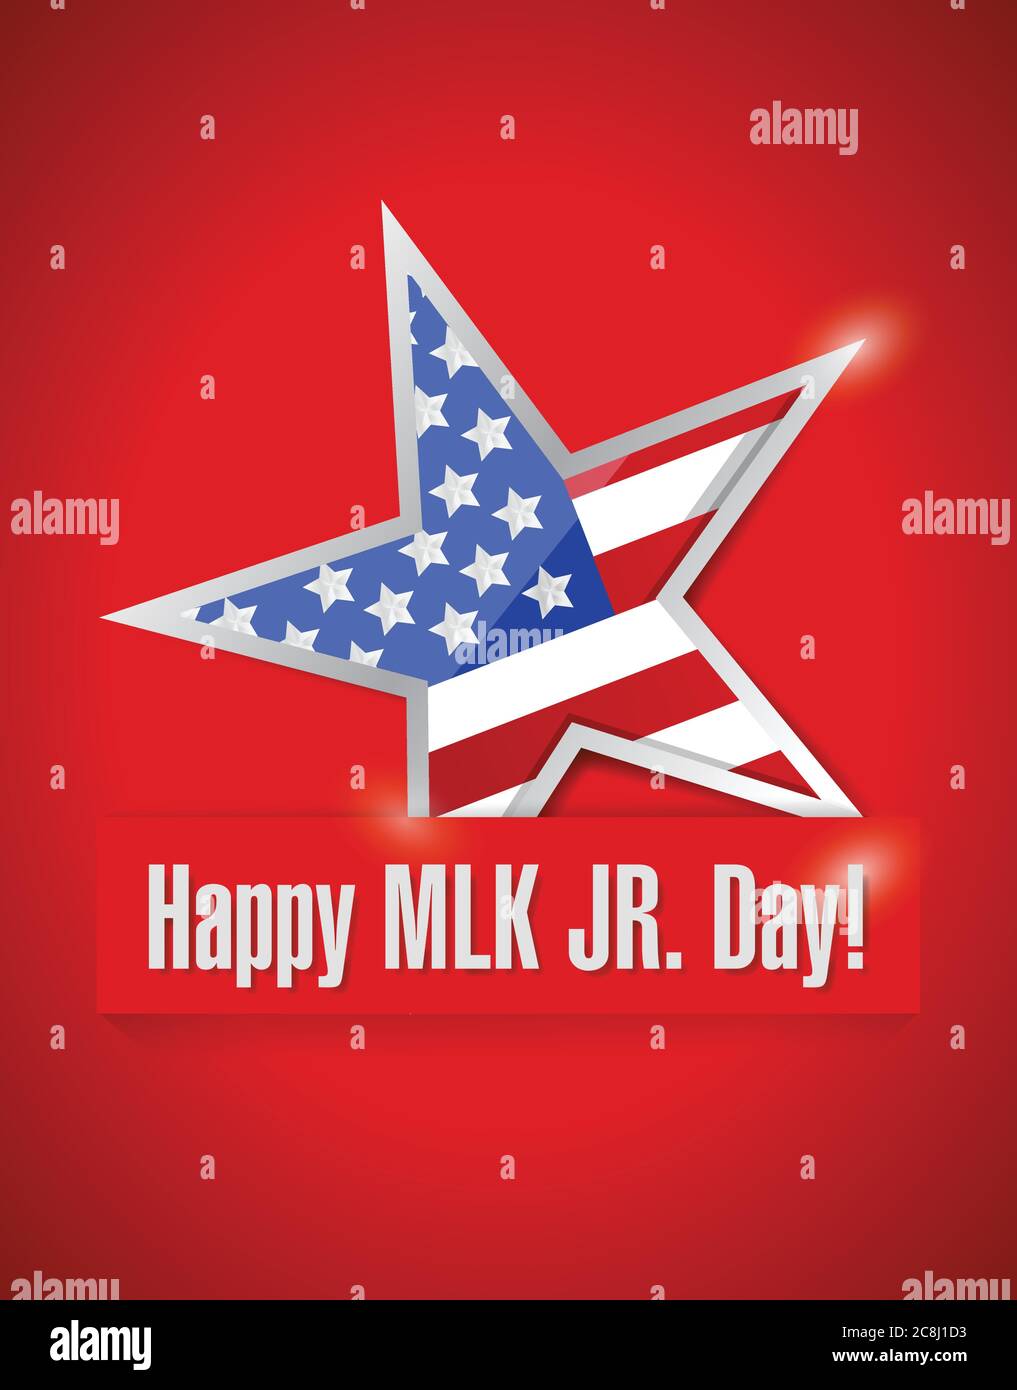 Happy MLK jr day illustration design over a red background Stock Vector